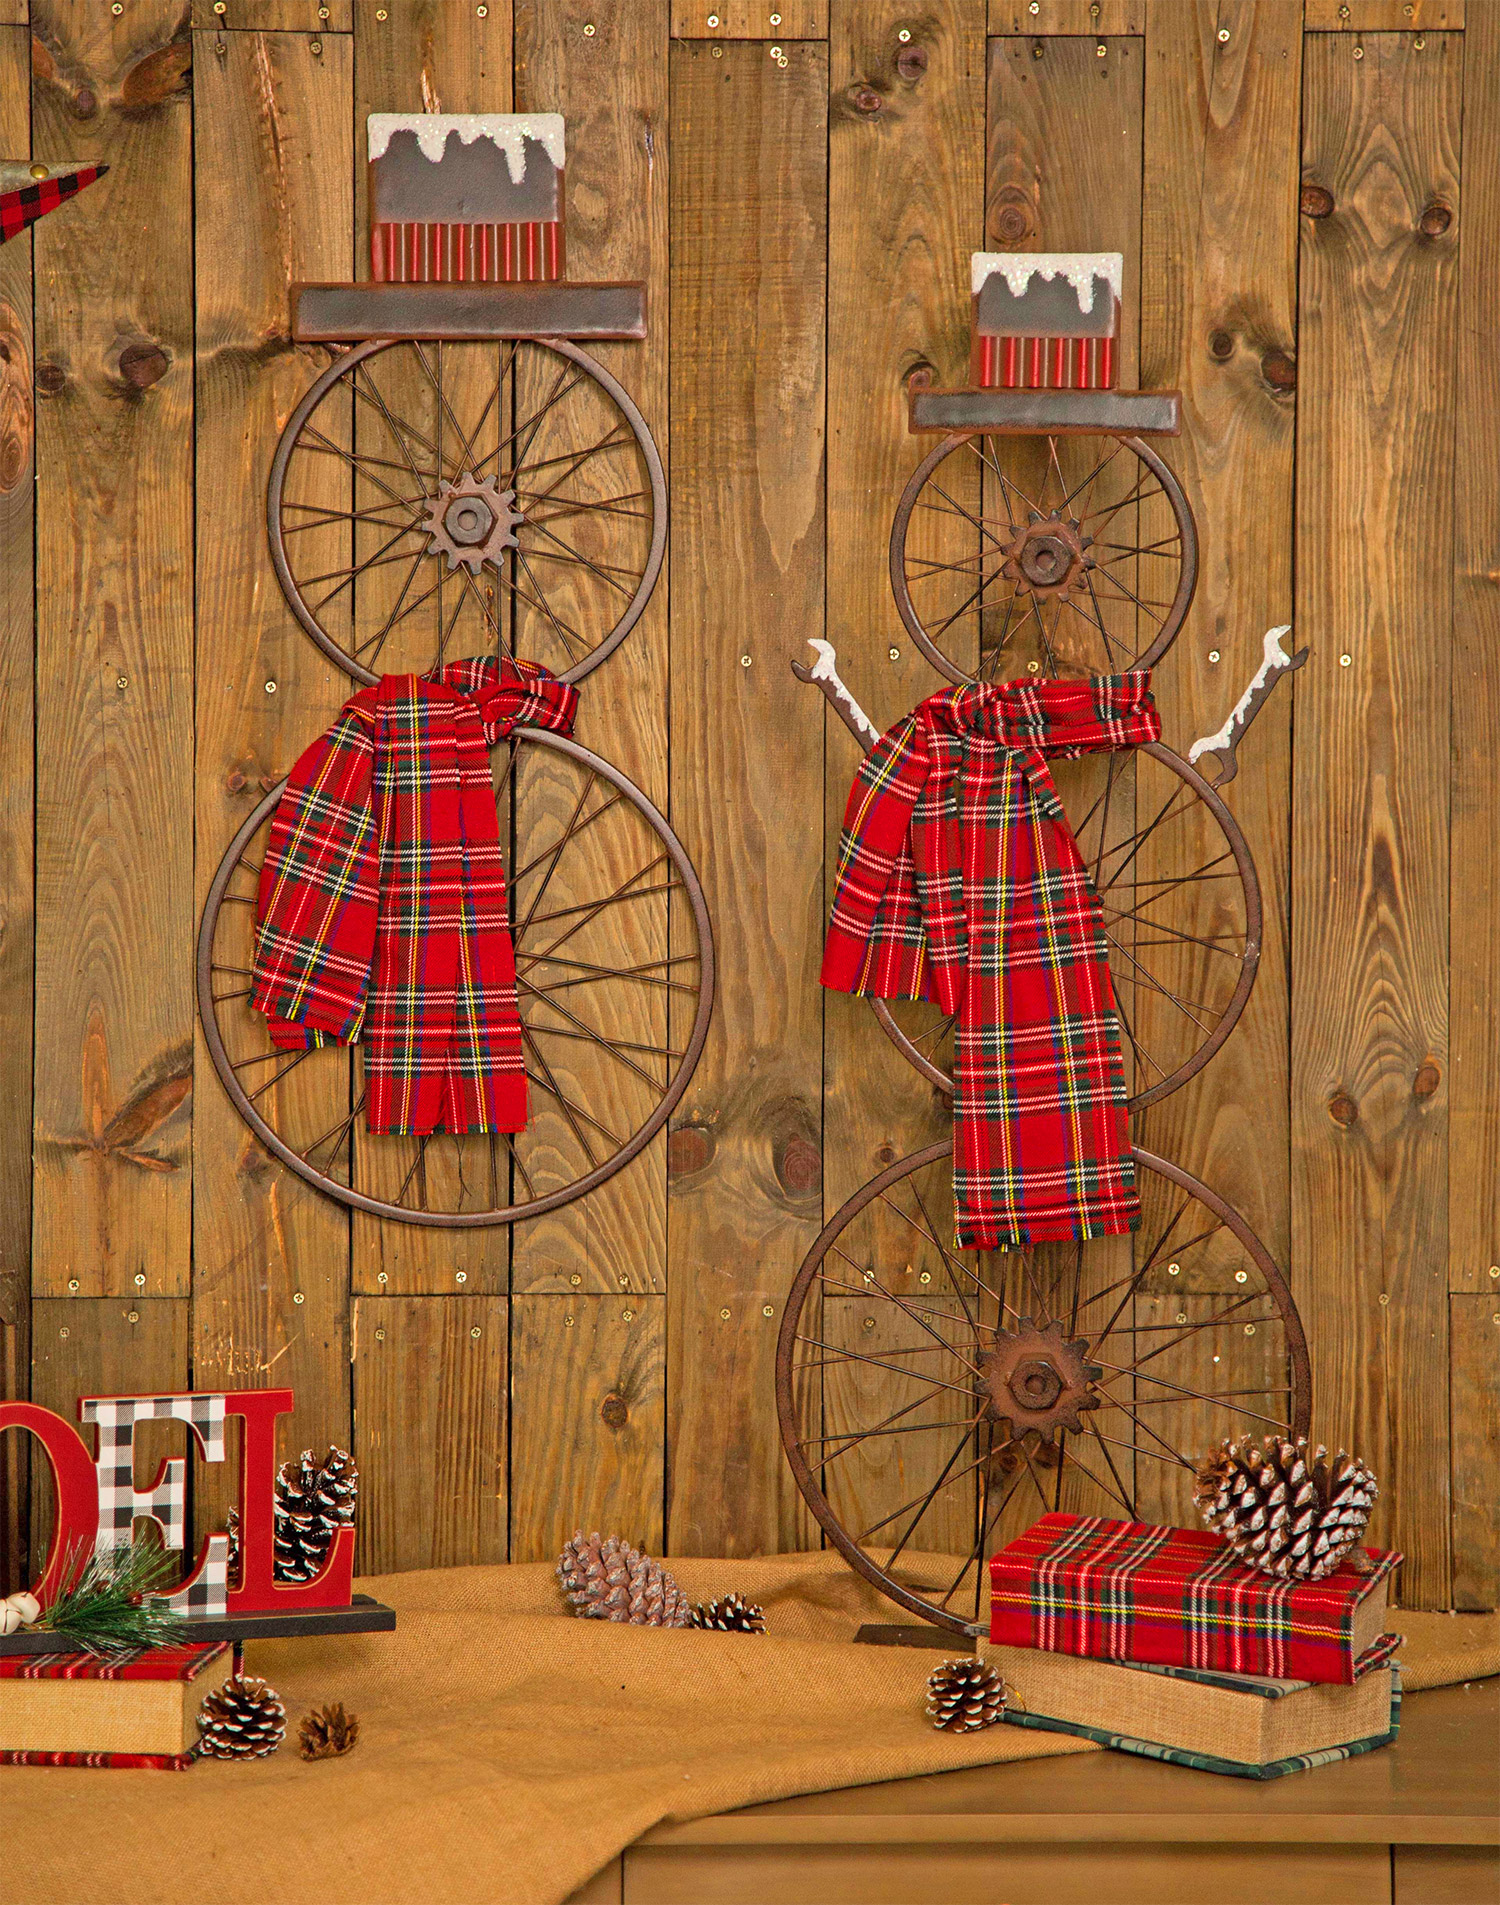 Vintage Bicycle Wheels Turned Into Snowmen - Bike turn snowman Christmas Decorations